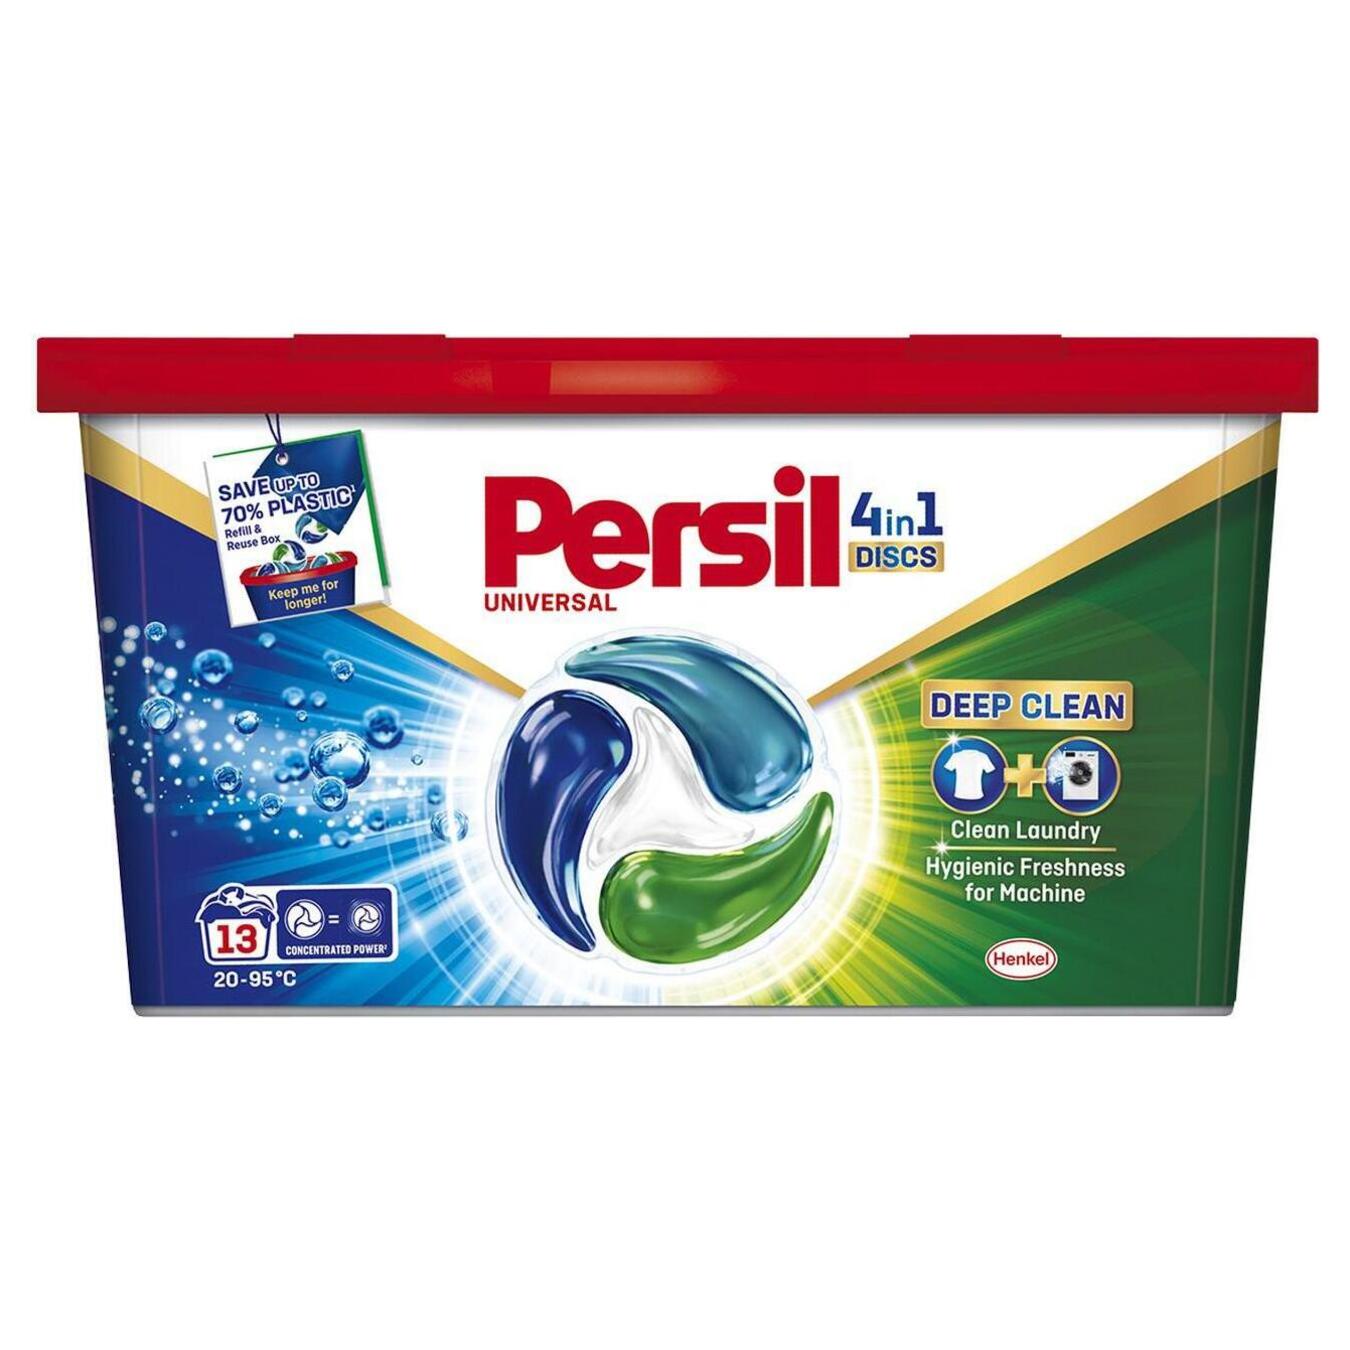 Capsules for washing Persil Disks Universal 13 pcs